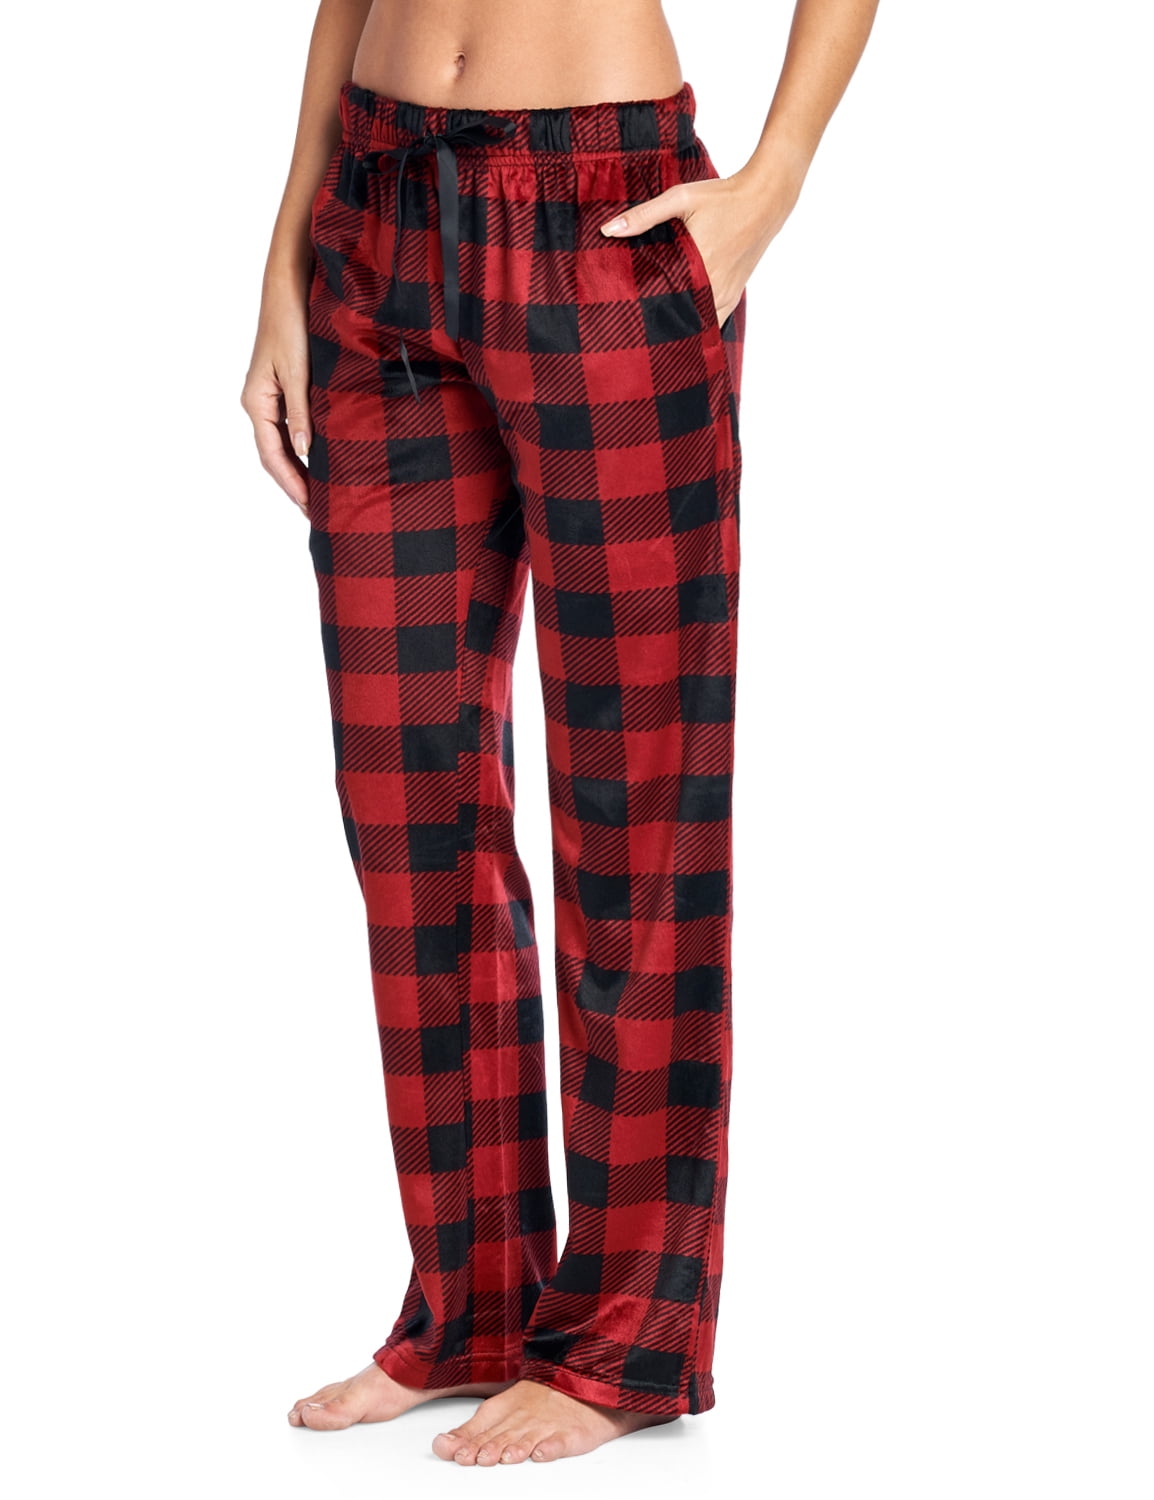 Ashford & Brooks Women's Plush Mink Fleece Pajama Sleep Pants - Walmart.com